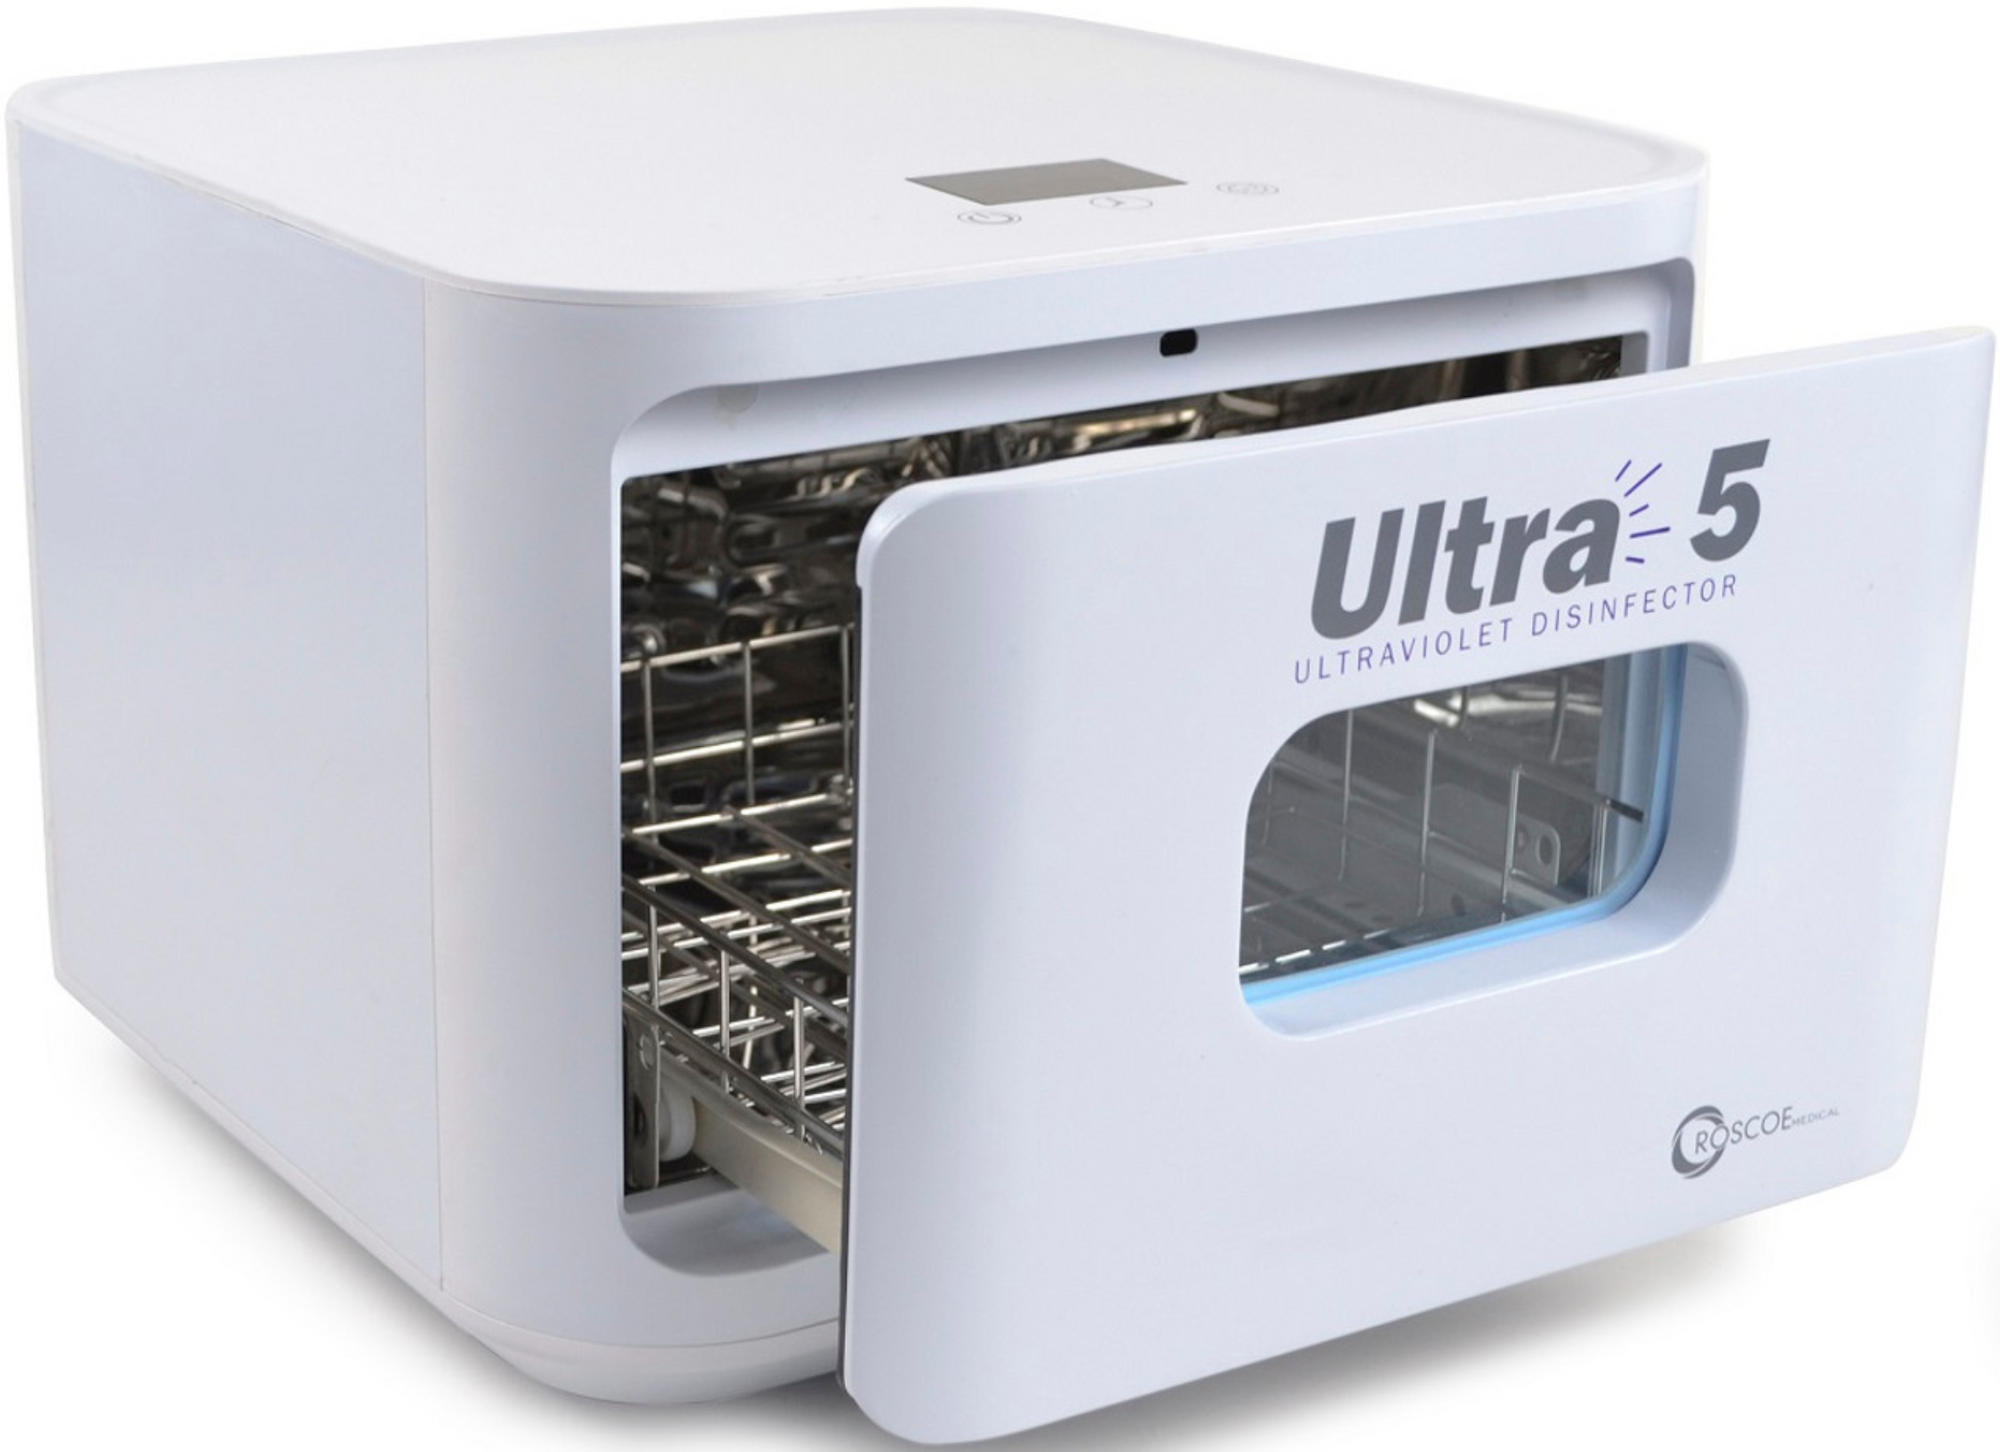 Ultra-5 Ultraviolet Disinfector